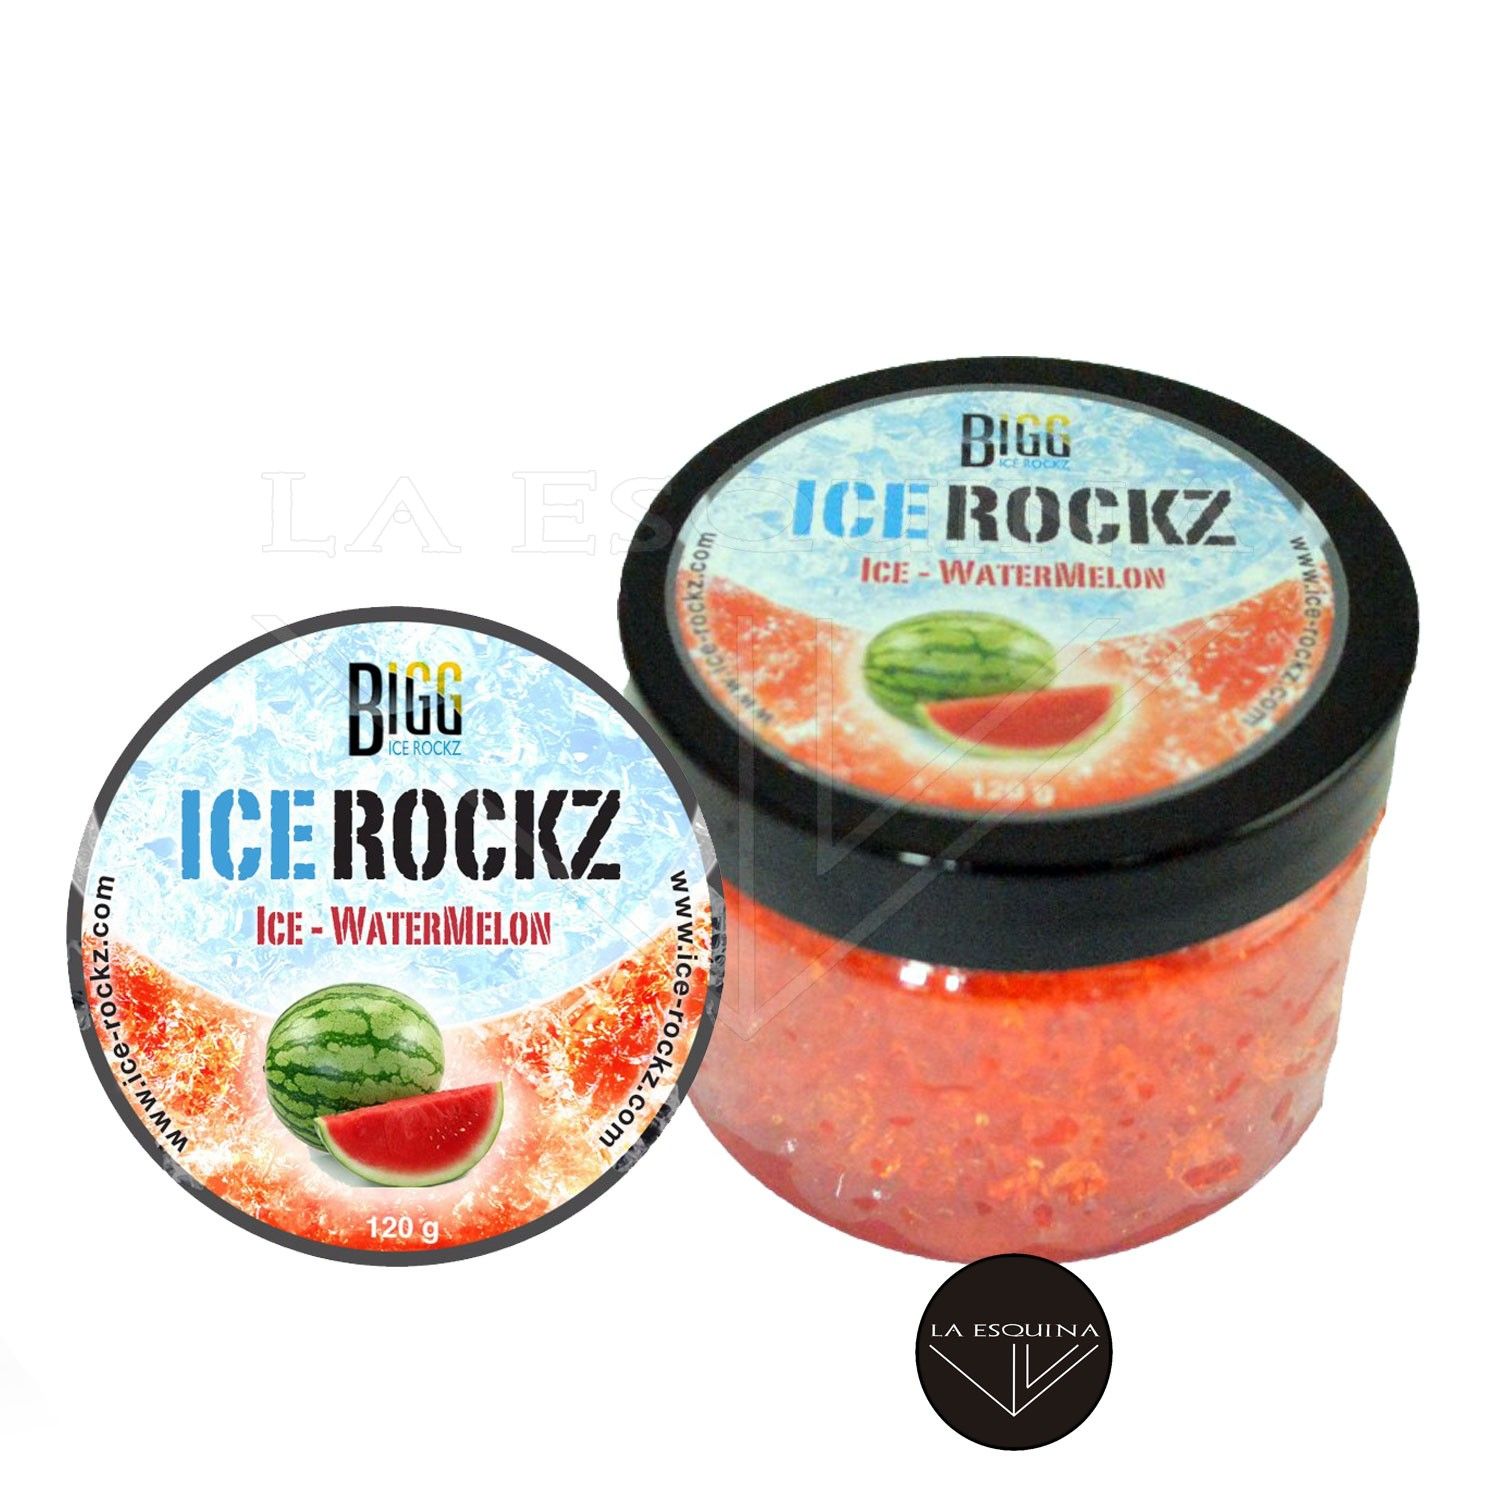 Gel Rock de Cachimba BIGG ICE ROCKZ – 120 g. – Ice-Watermelon